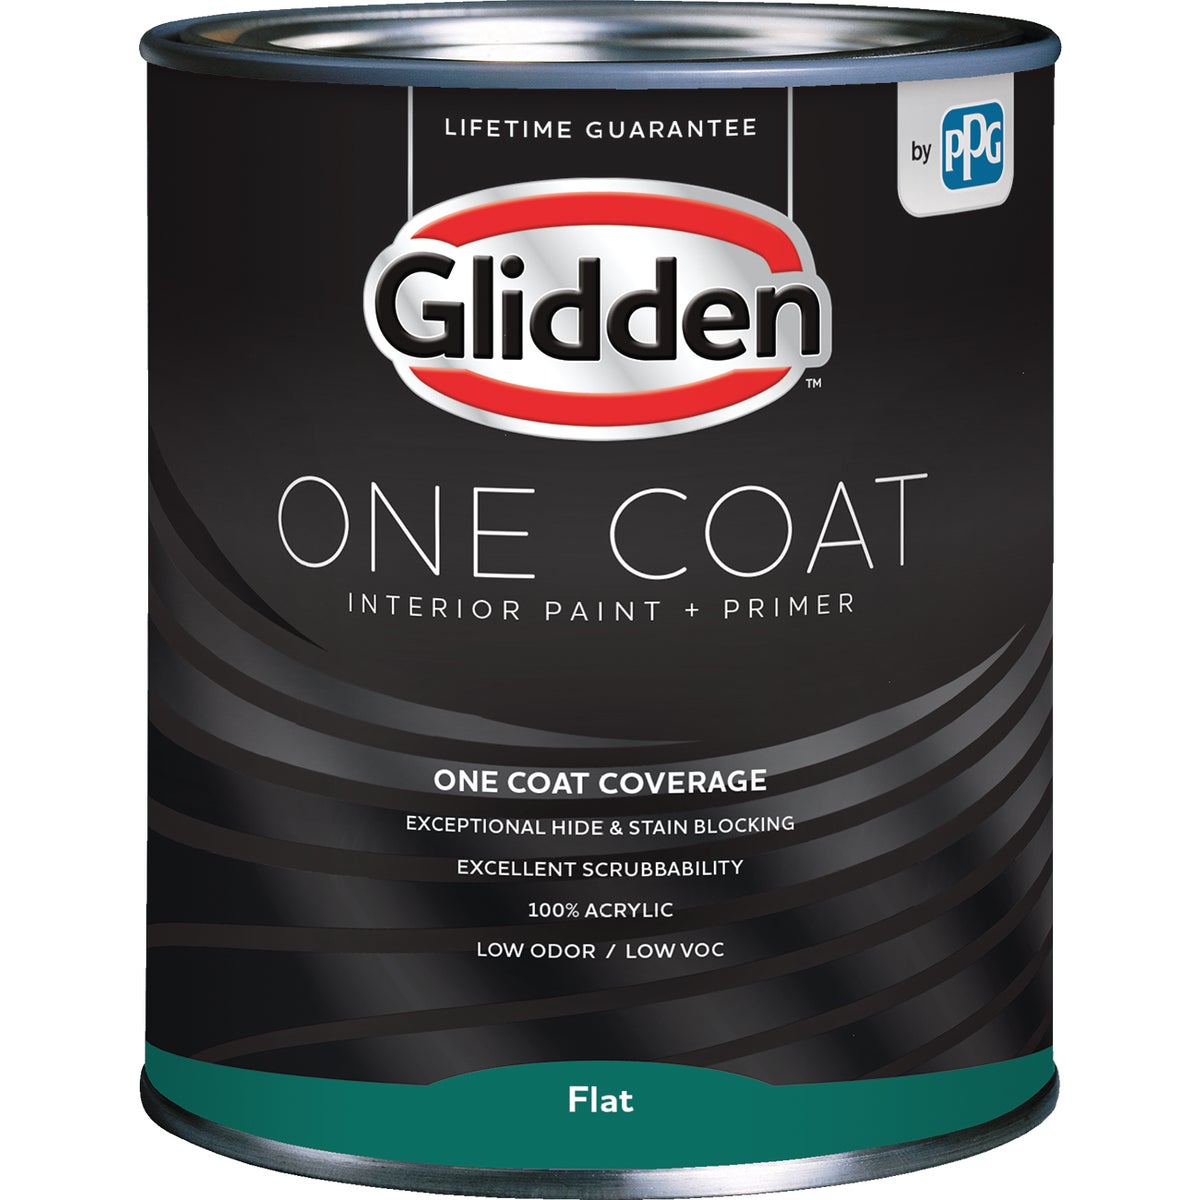 Glidden One Coat Interior Paint + Primer Flat Ultra Deep Base Quart